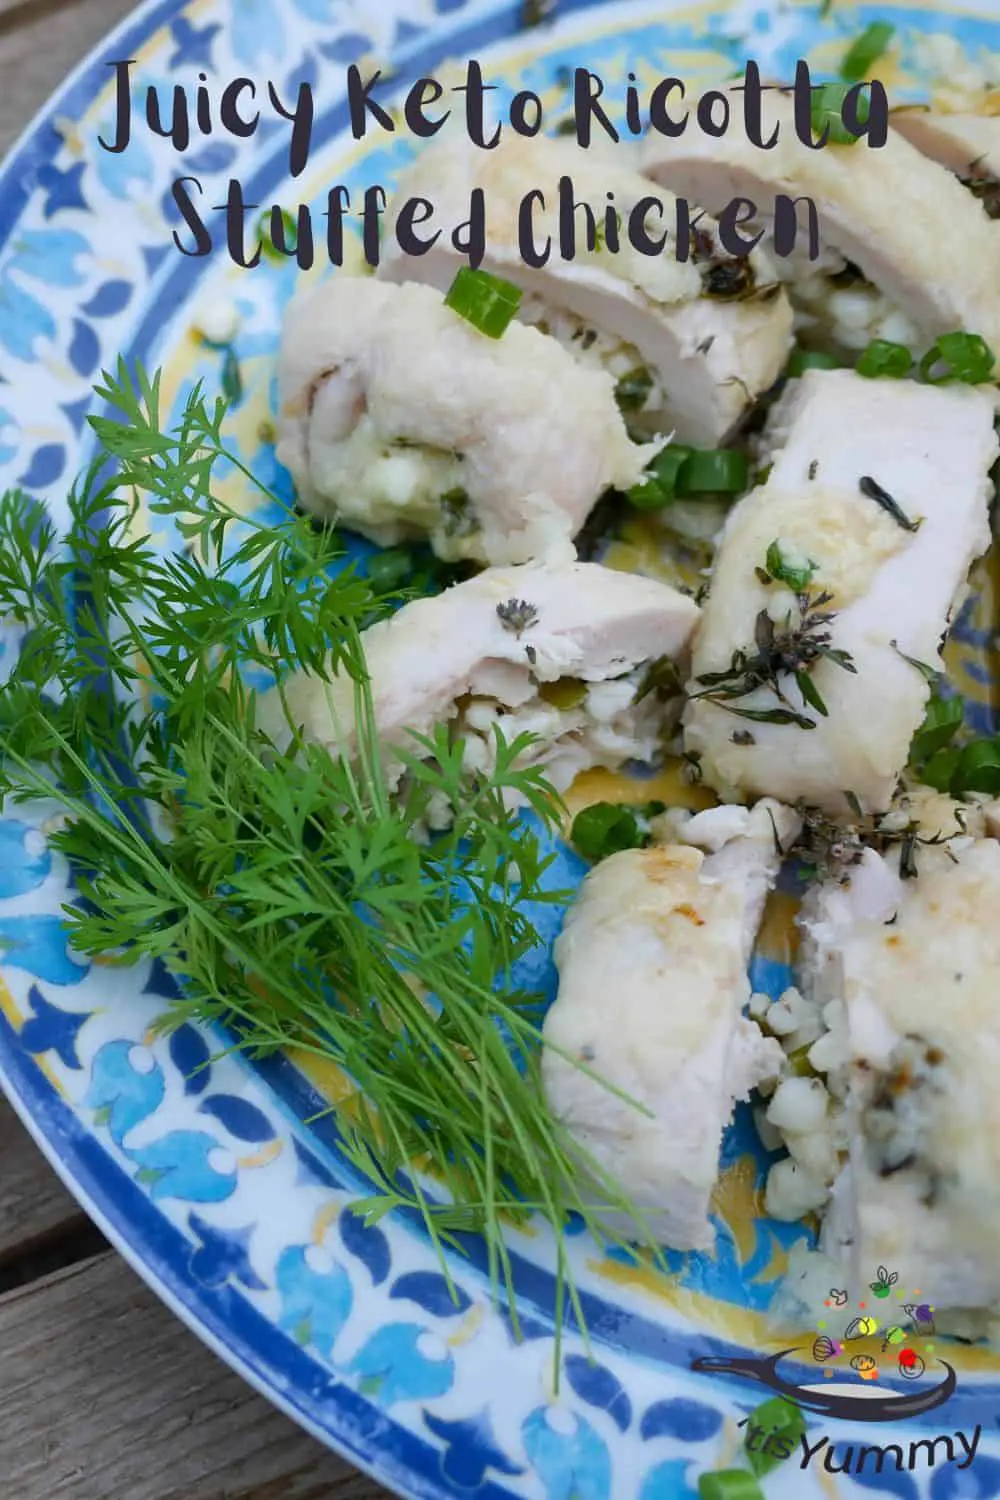 keto ricotta stuffed chicken on a blue plate with garnish